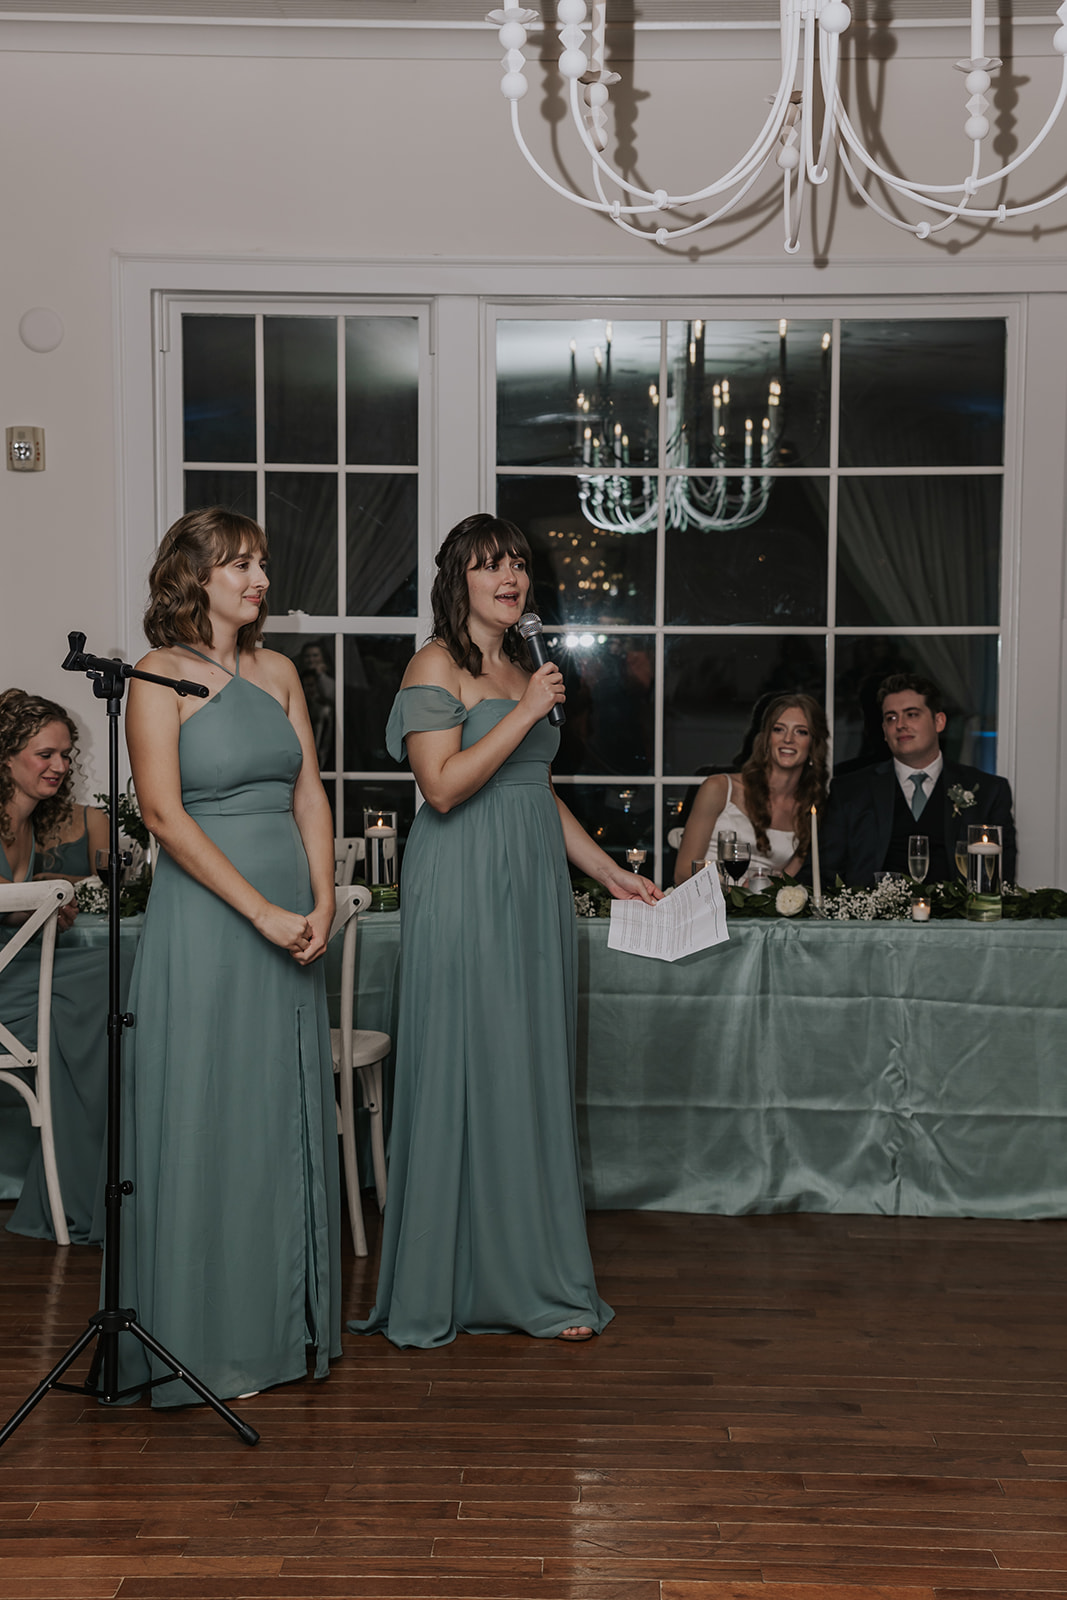 Stunning bride and groom look on as their guests enjoy their dreamy Georgia wedding reception